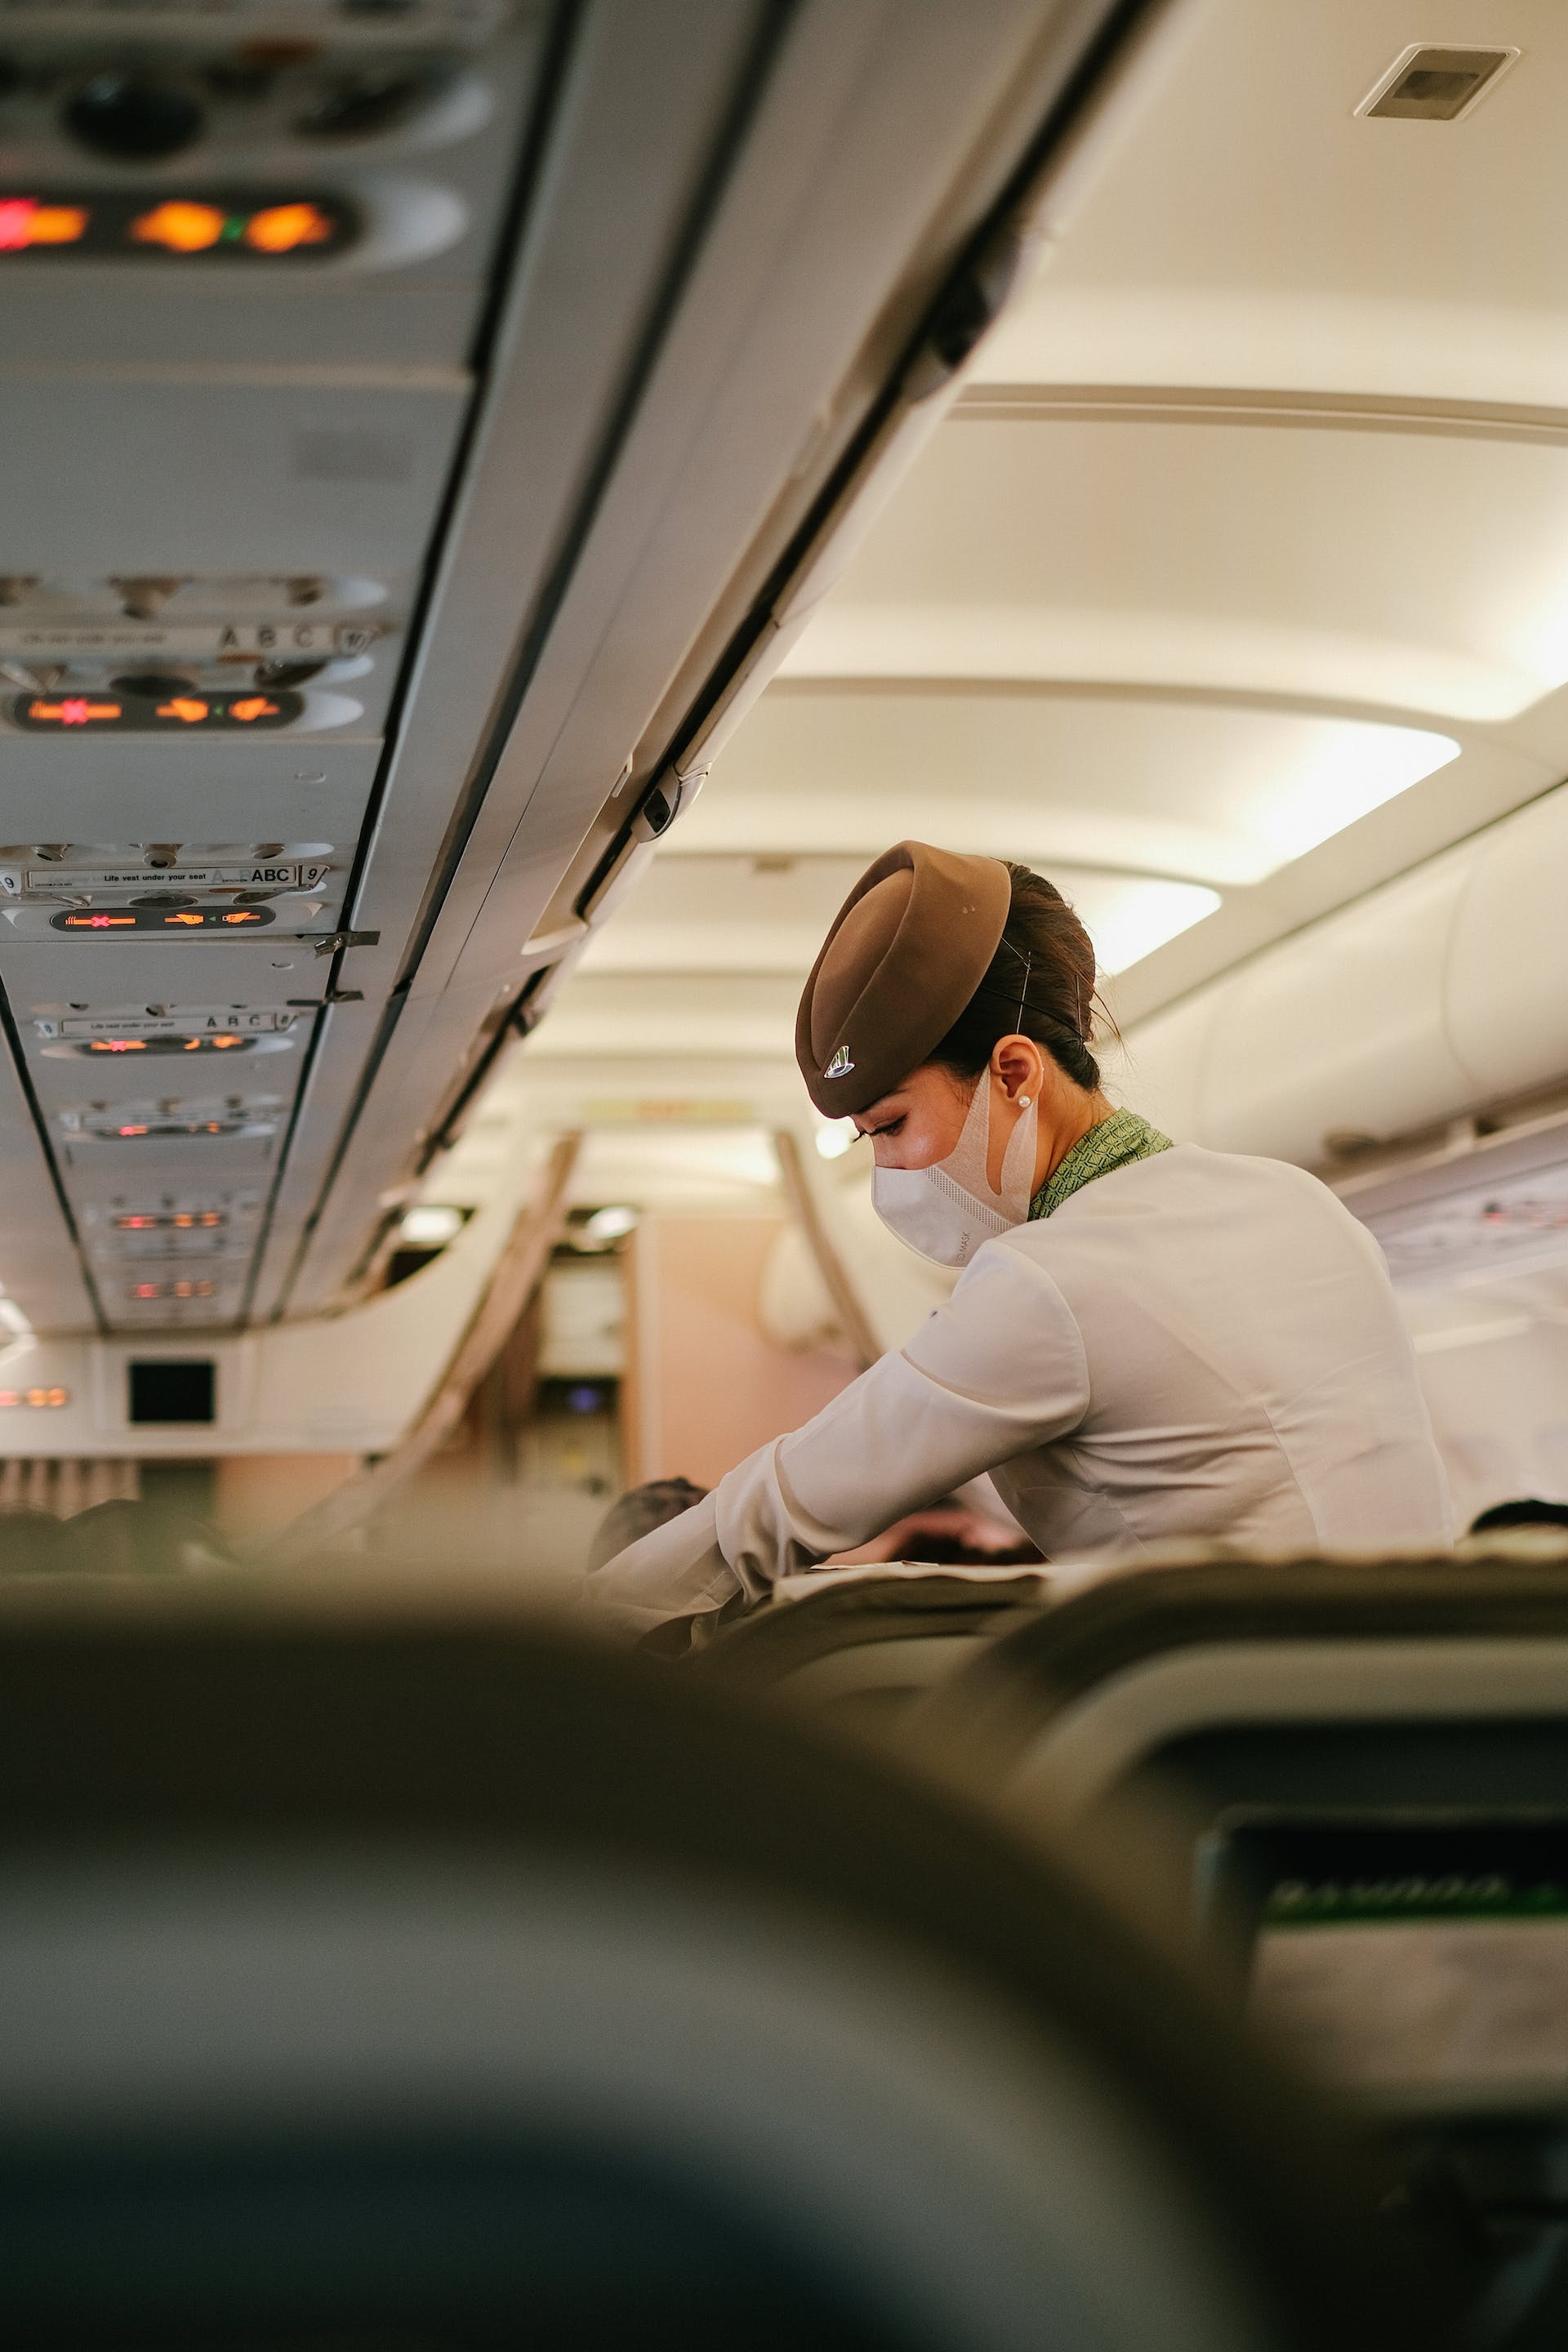 A flight attendant | Source: Pexels